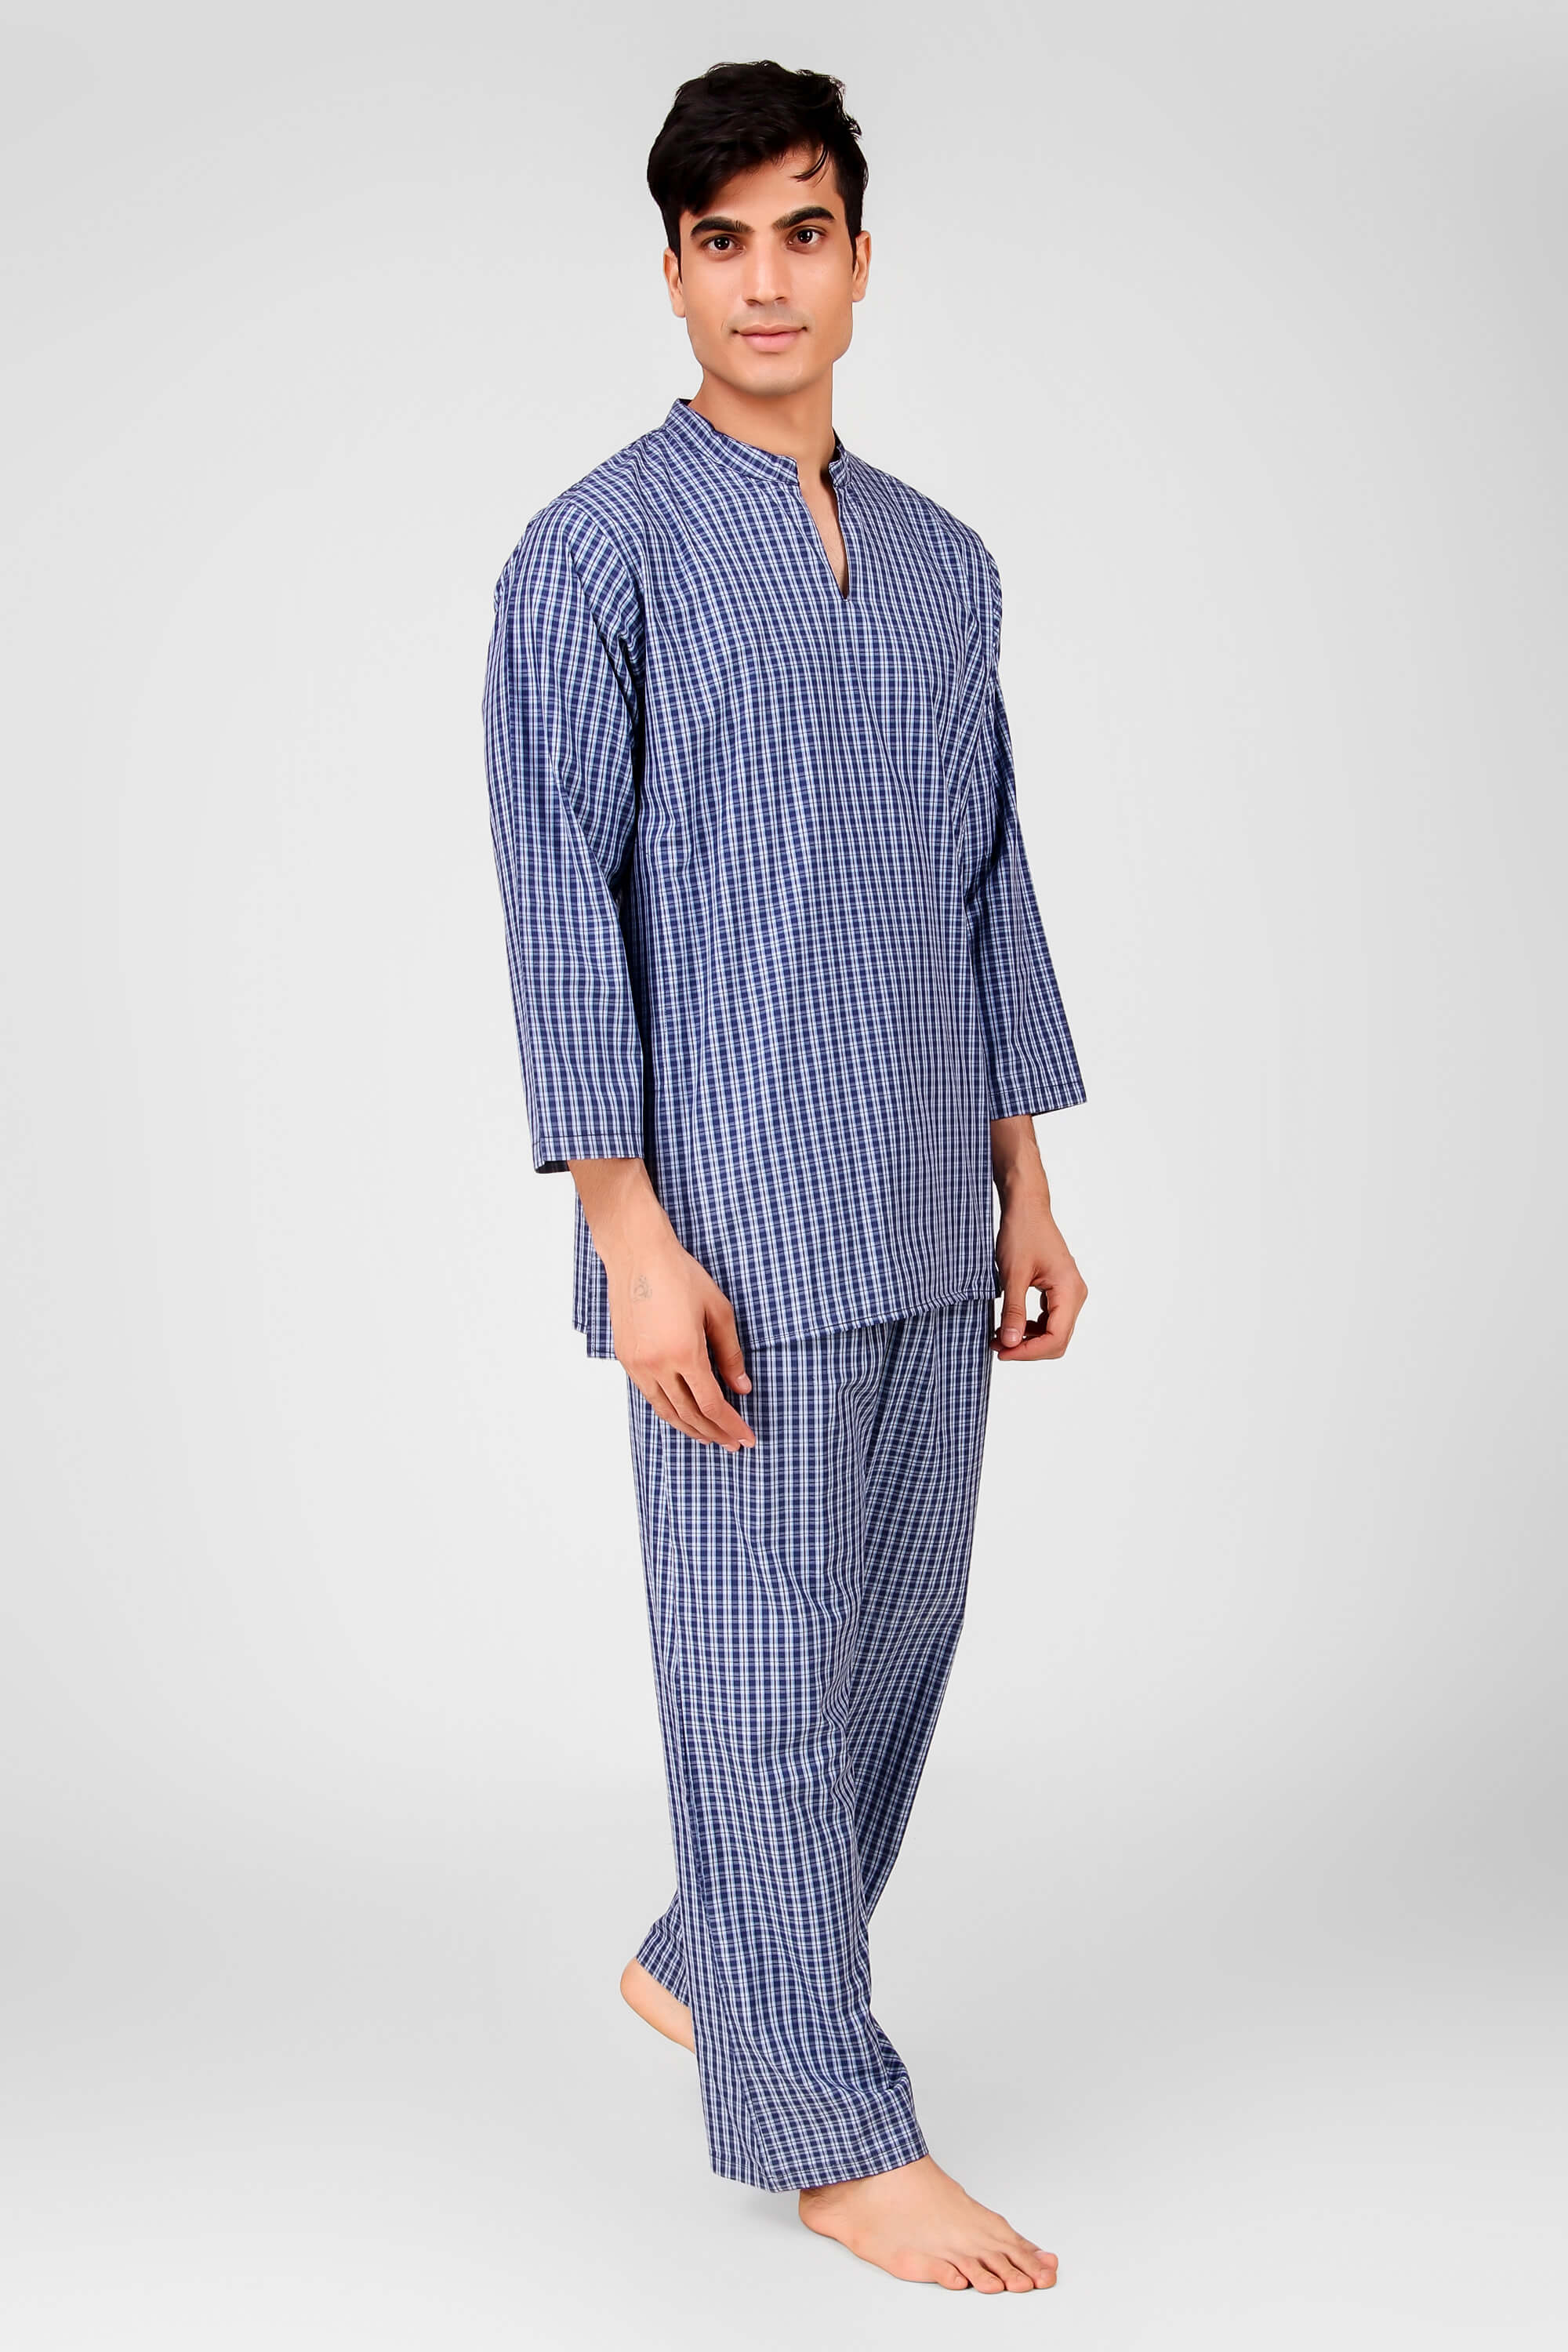 Men's Night Suit (Short Sleeves) – Hinz Knit